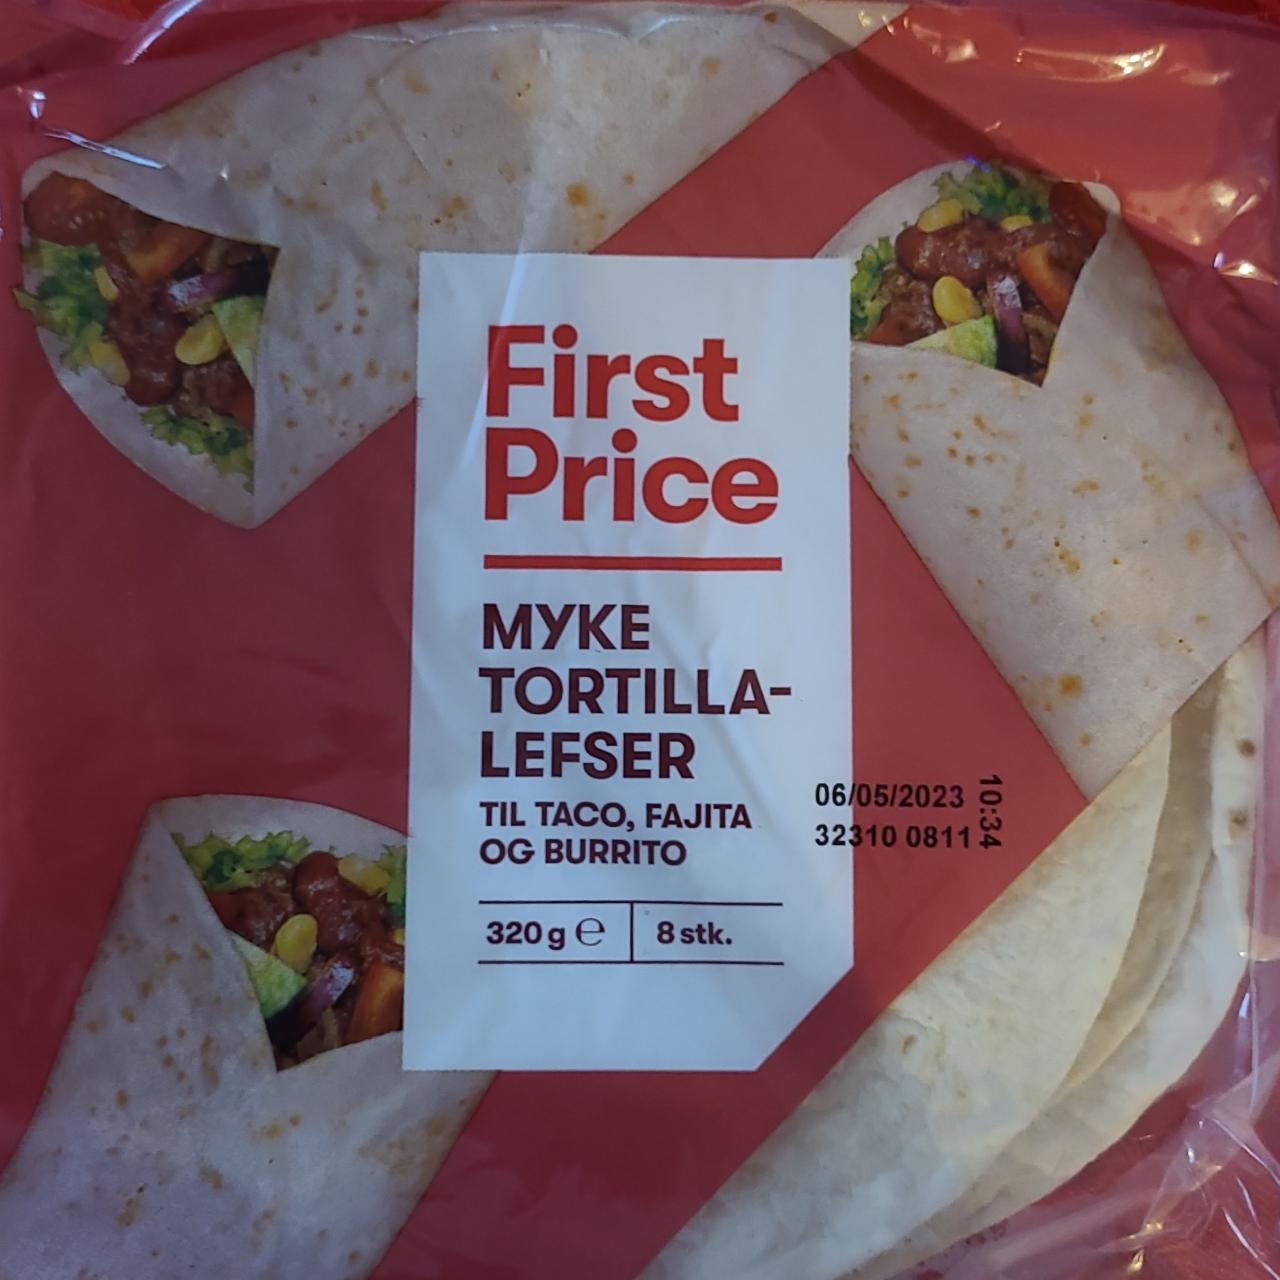 Fotografie - Myke tortilla-lefser First Price